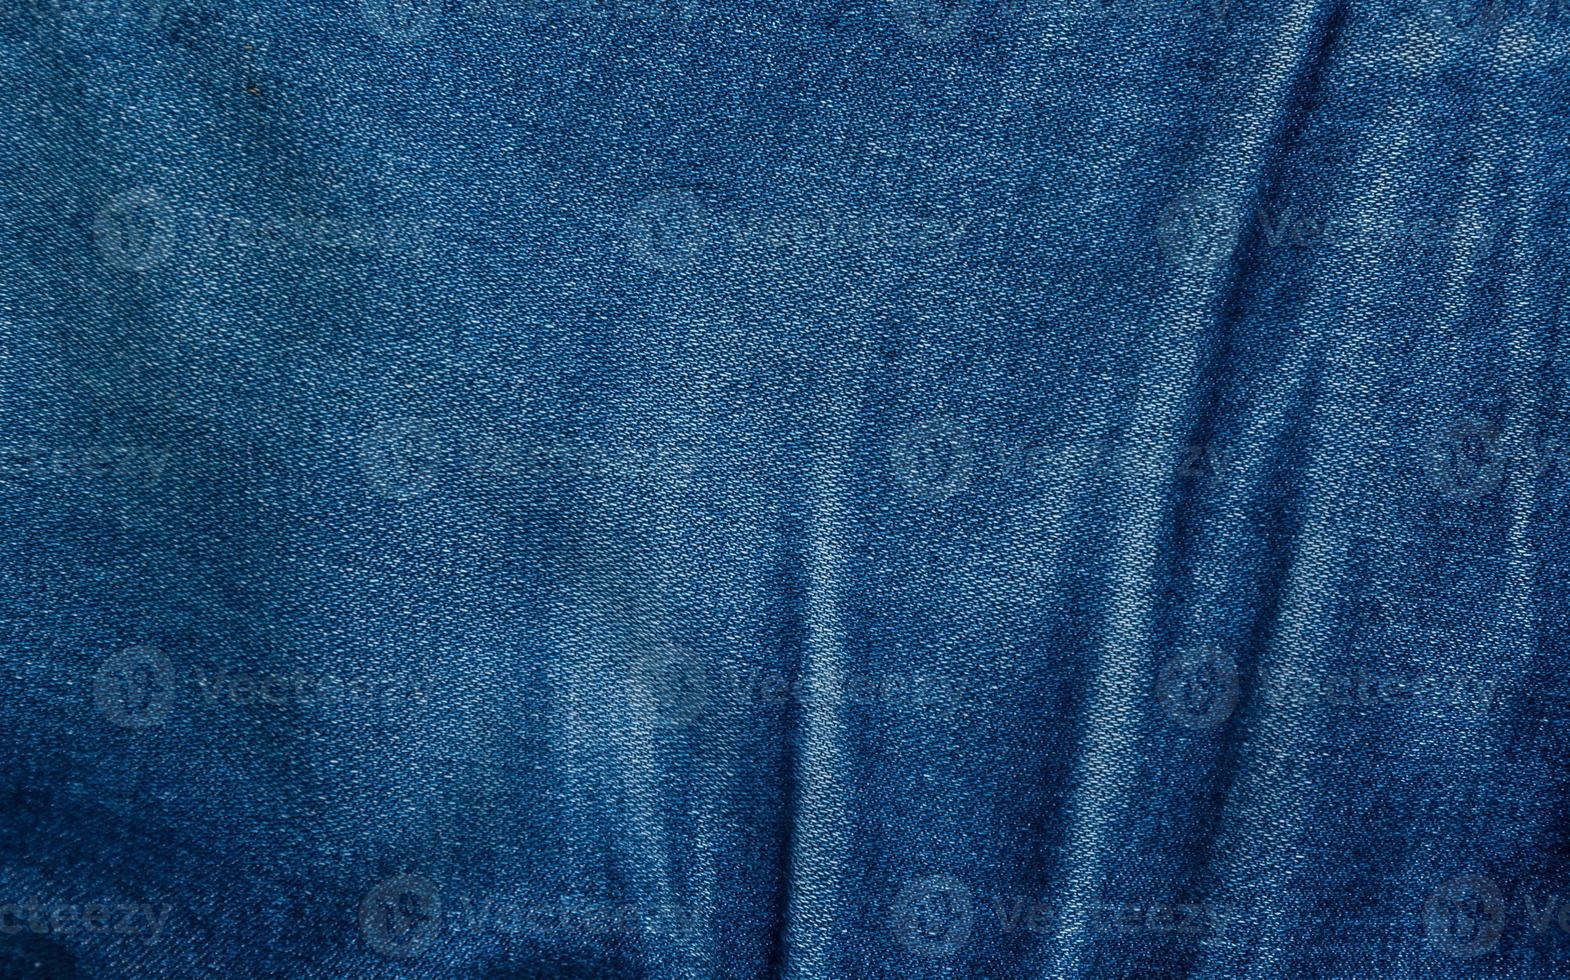 blu jean sfondo ,blu denim jeans struttura, jeans sfondo foto